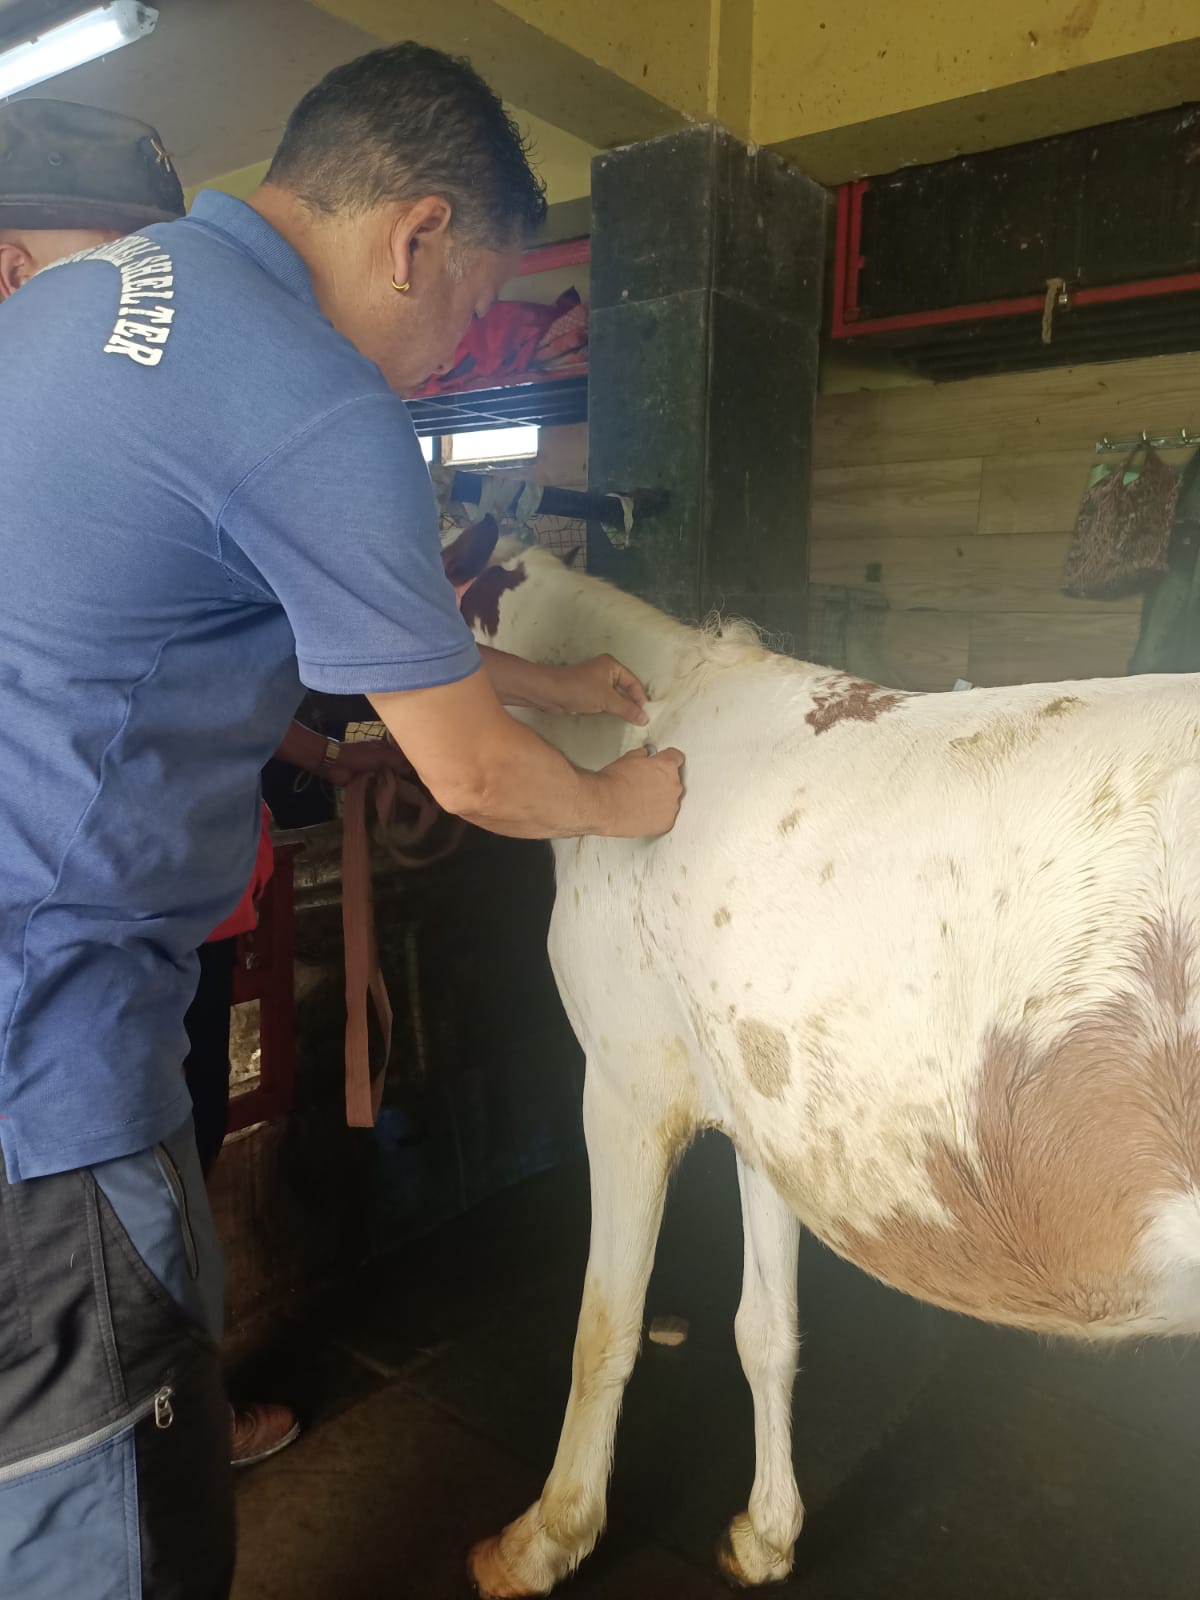 Wangel from DAS vaccinating a Pony from Darjeeling, Chowrasta